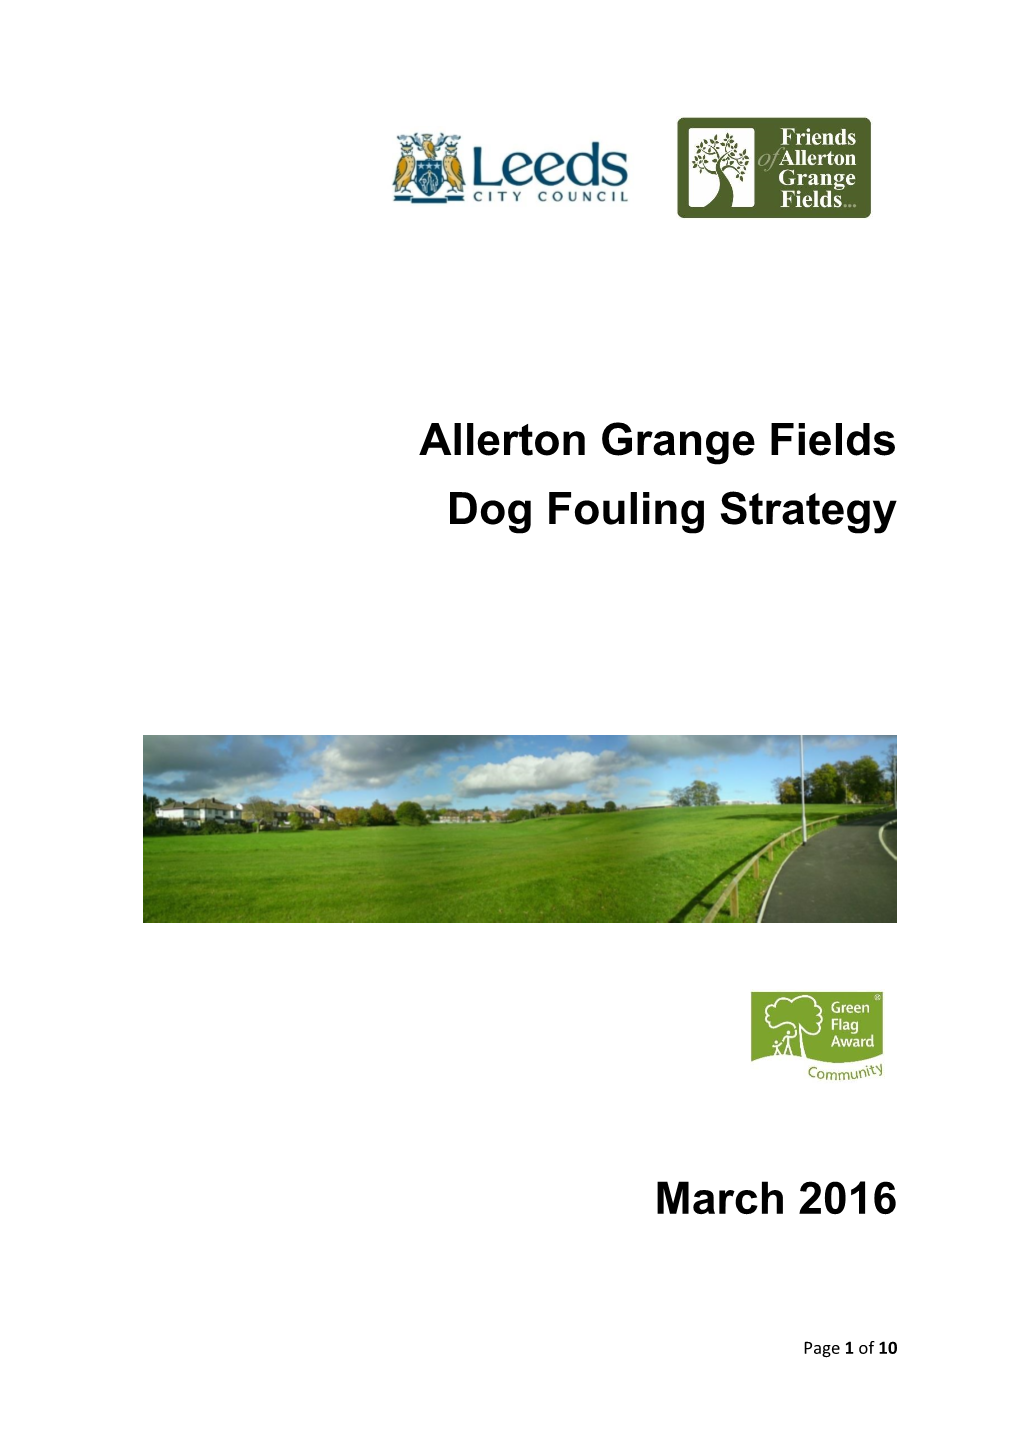 Allerton Grange Fields Dog Fouling Strategy March 2016